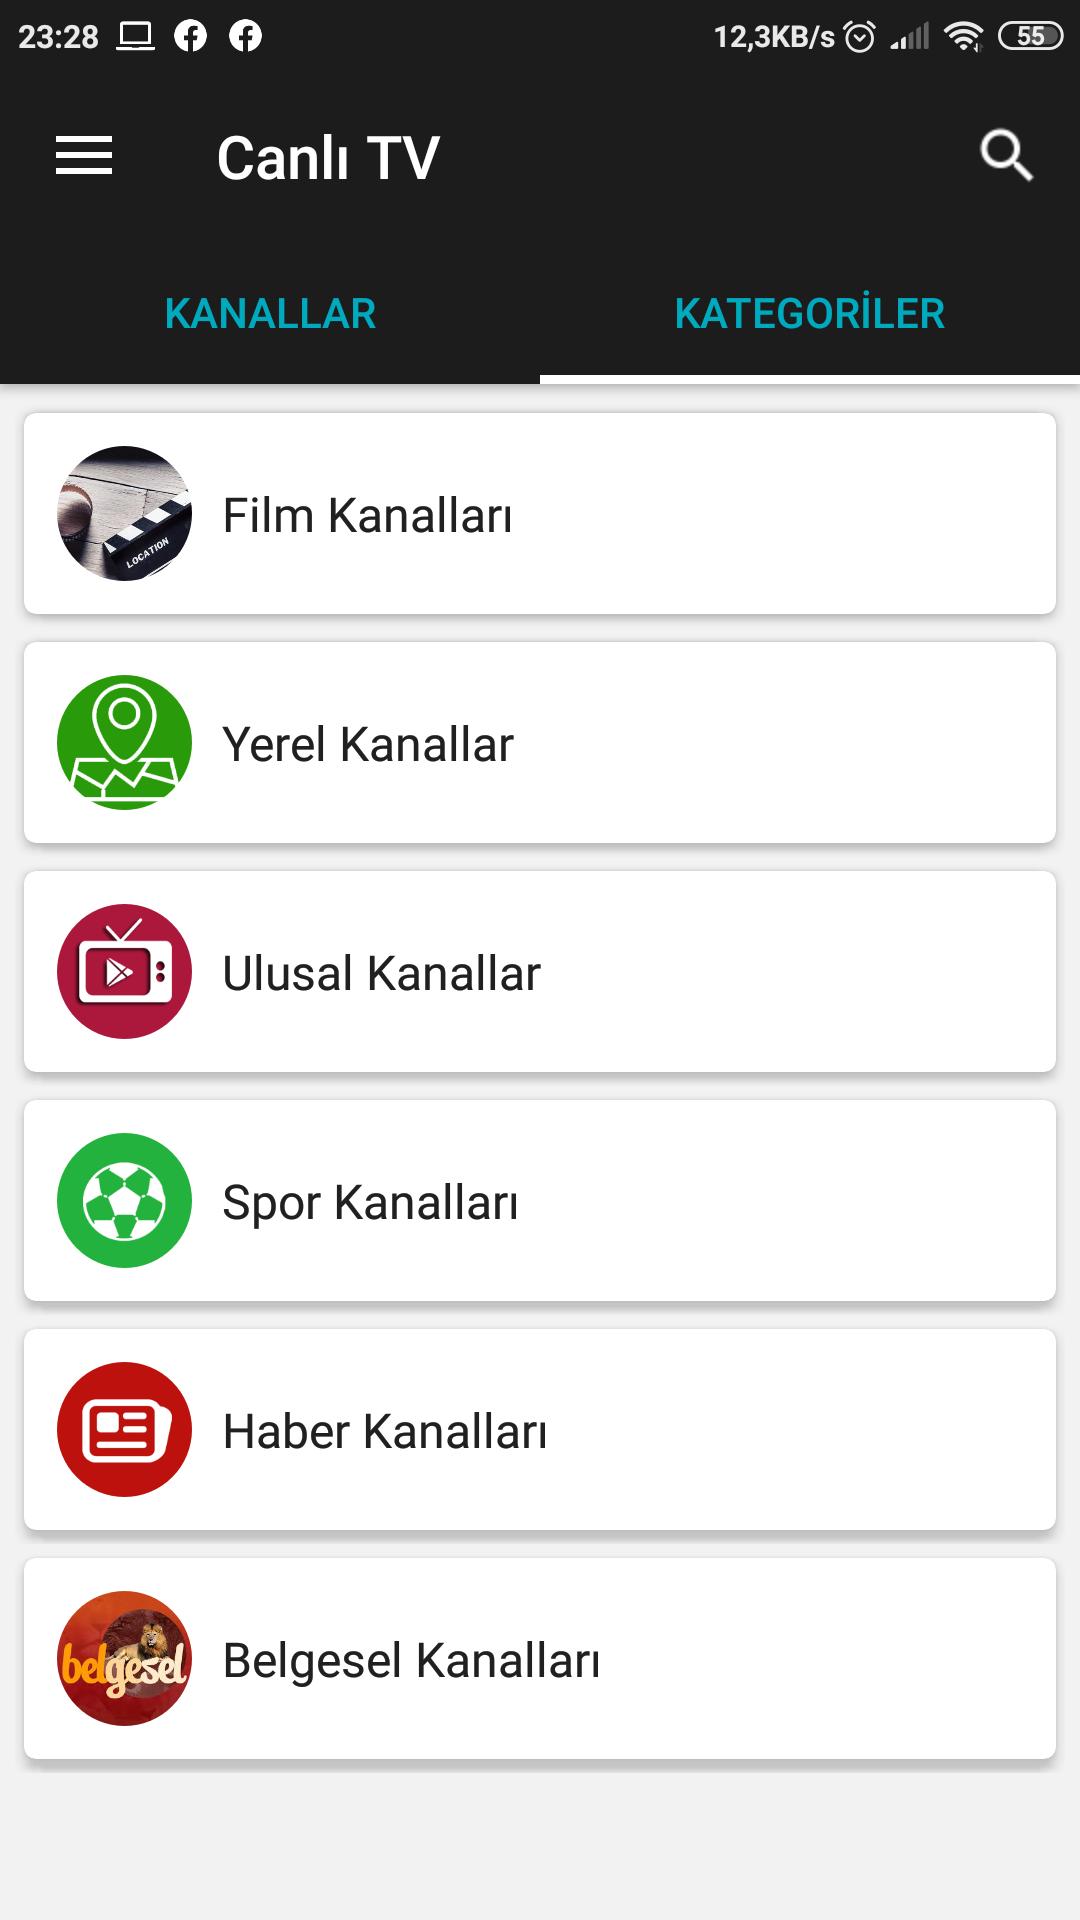 Canlı TV - Süper Lig Kesintisiz Maç İzle APK per Android Download